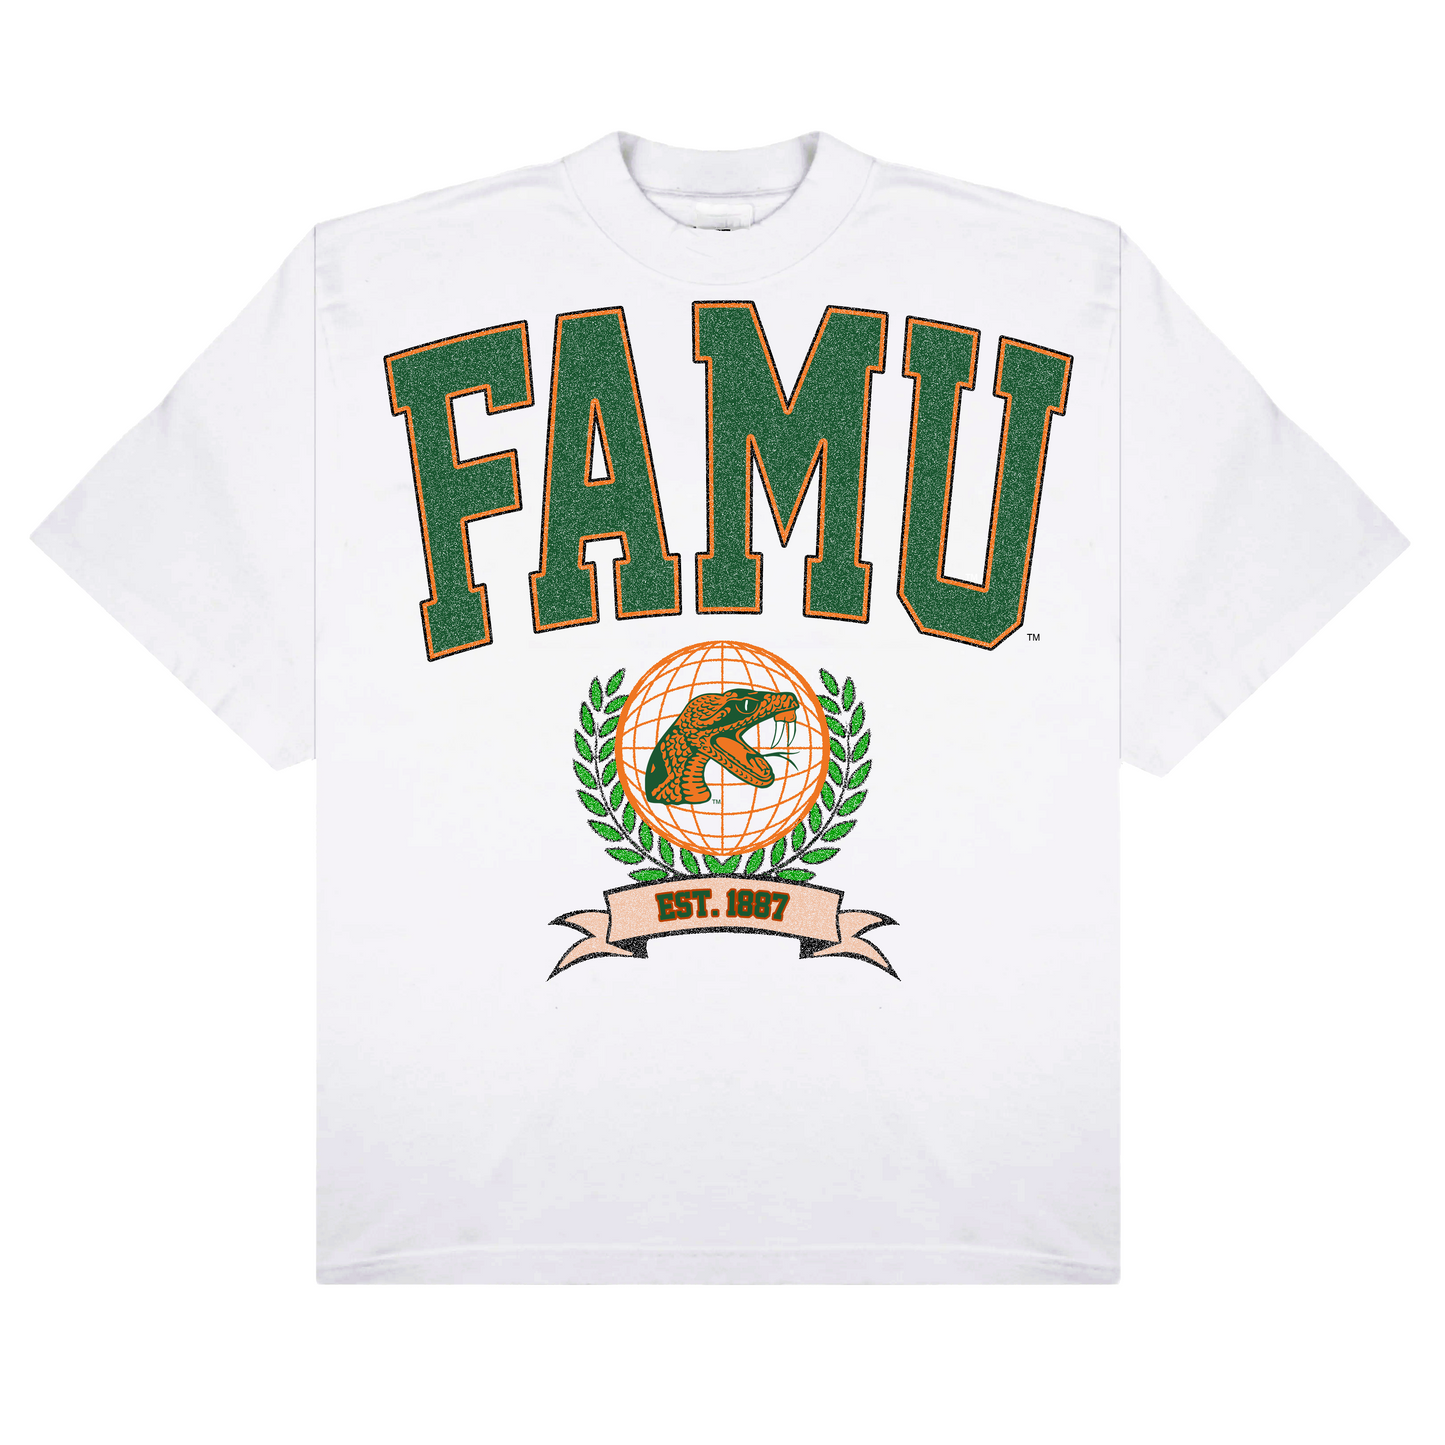 Florida A&M T-shirt - FAMU Apparel and Clothing - 1921 movement